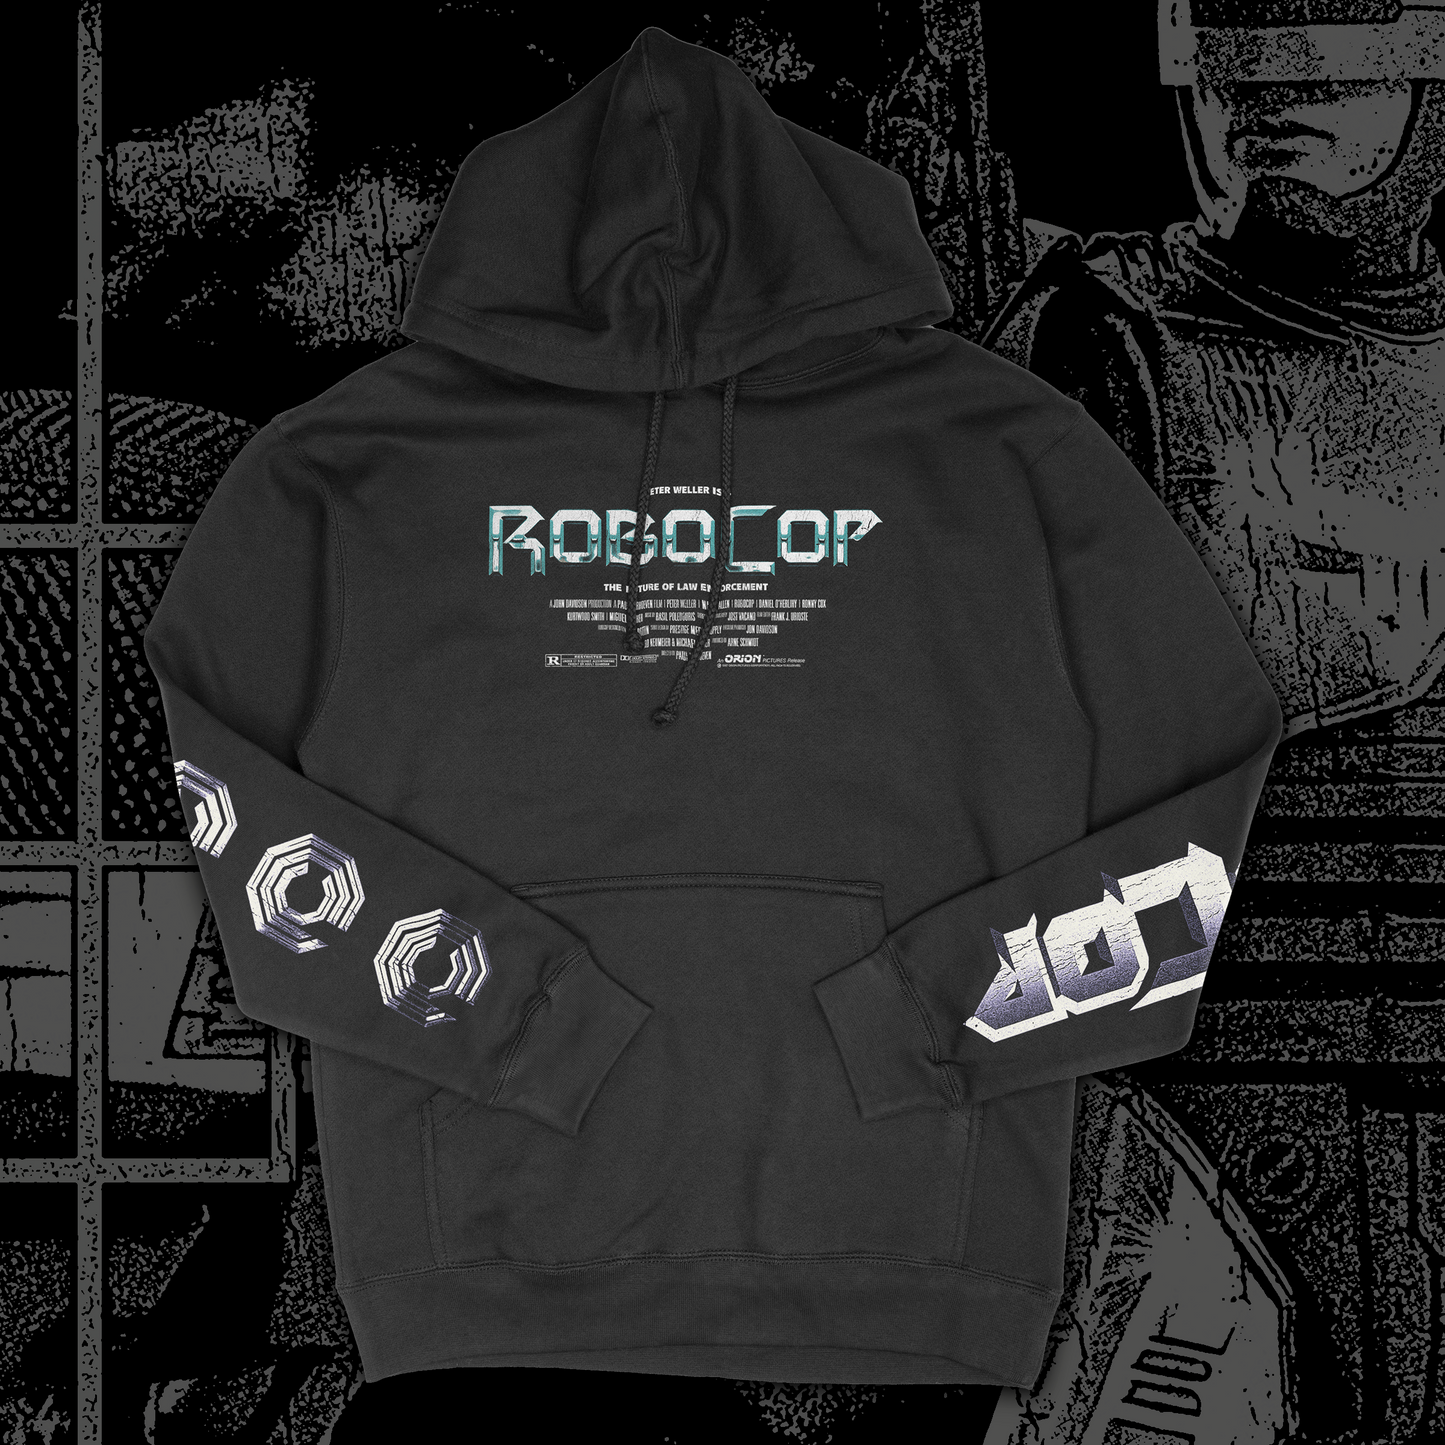 ROBOCOP - The Future Of Law Enforcement - Oversized Hoodie